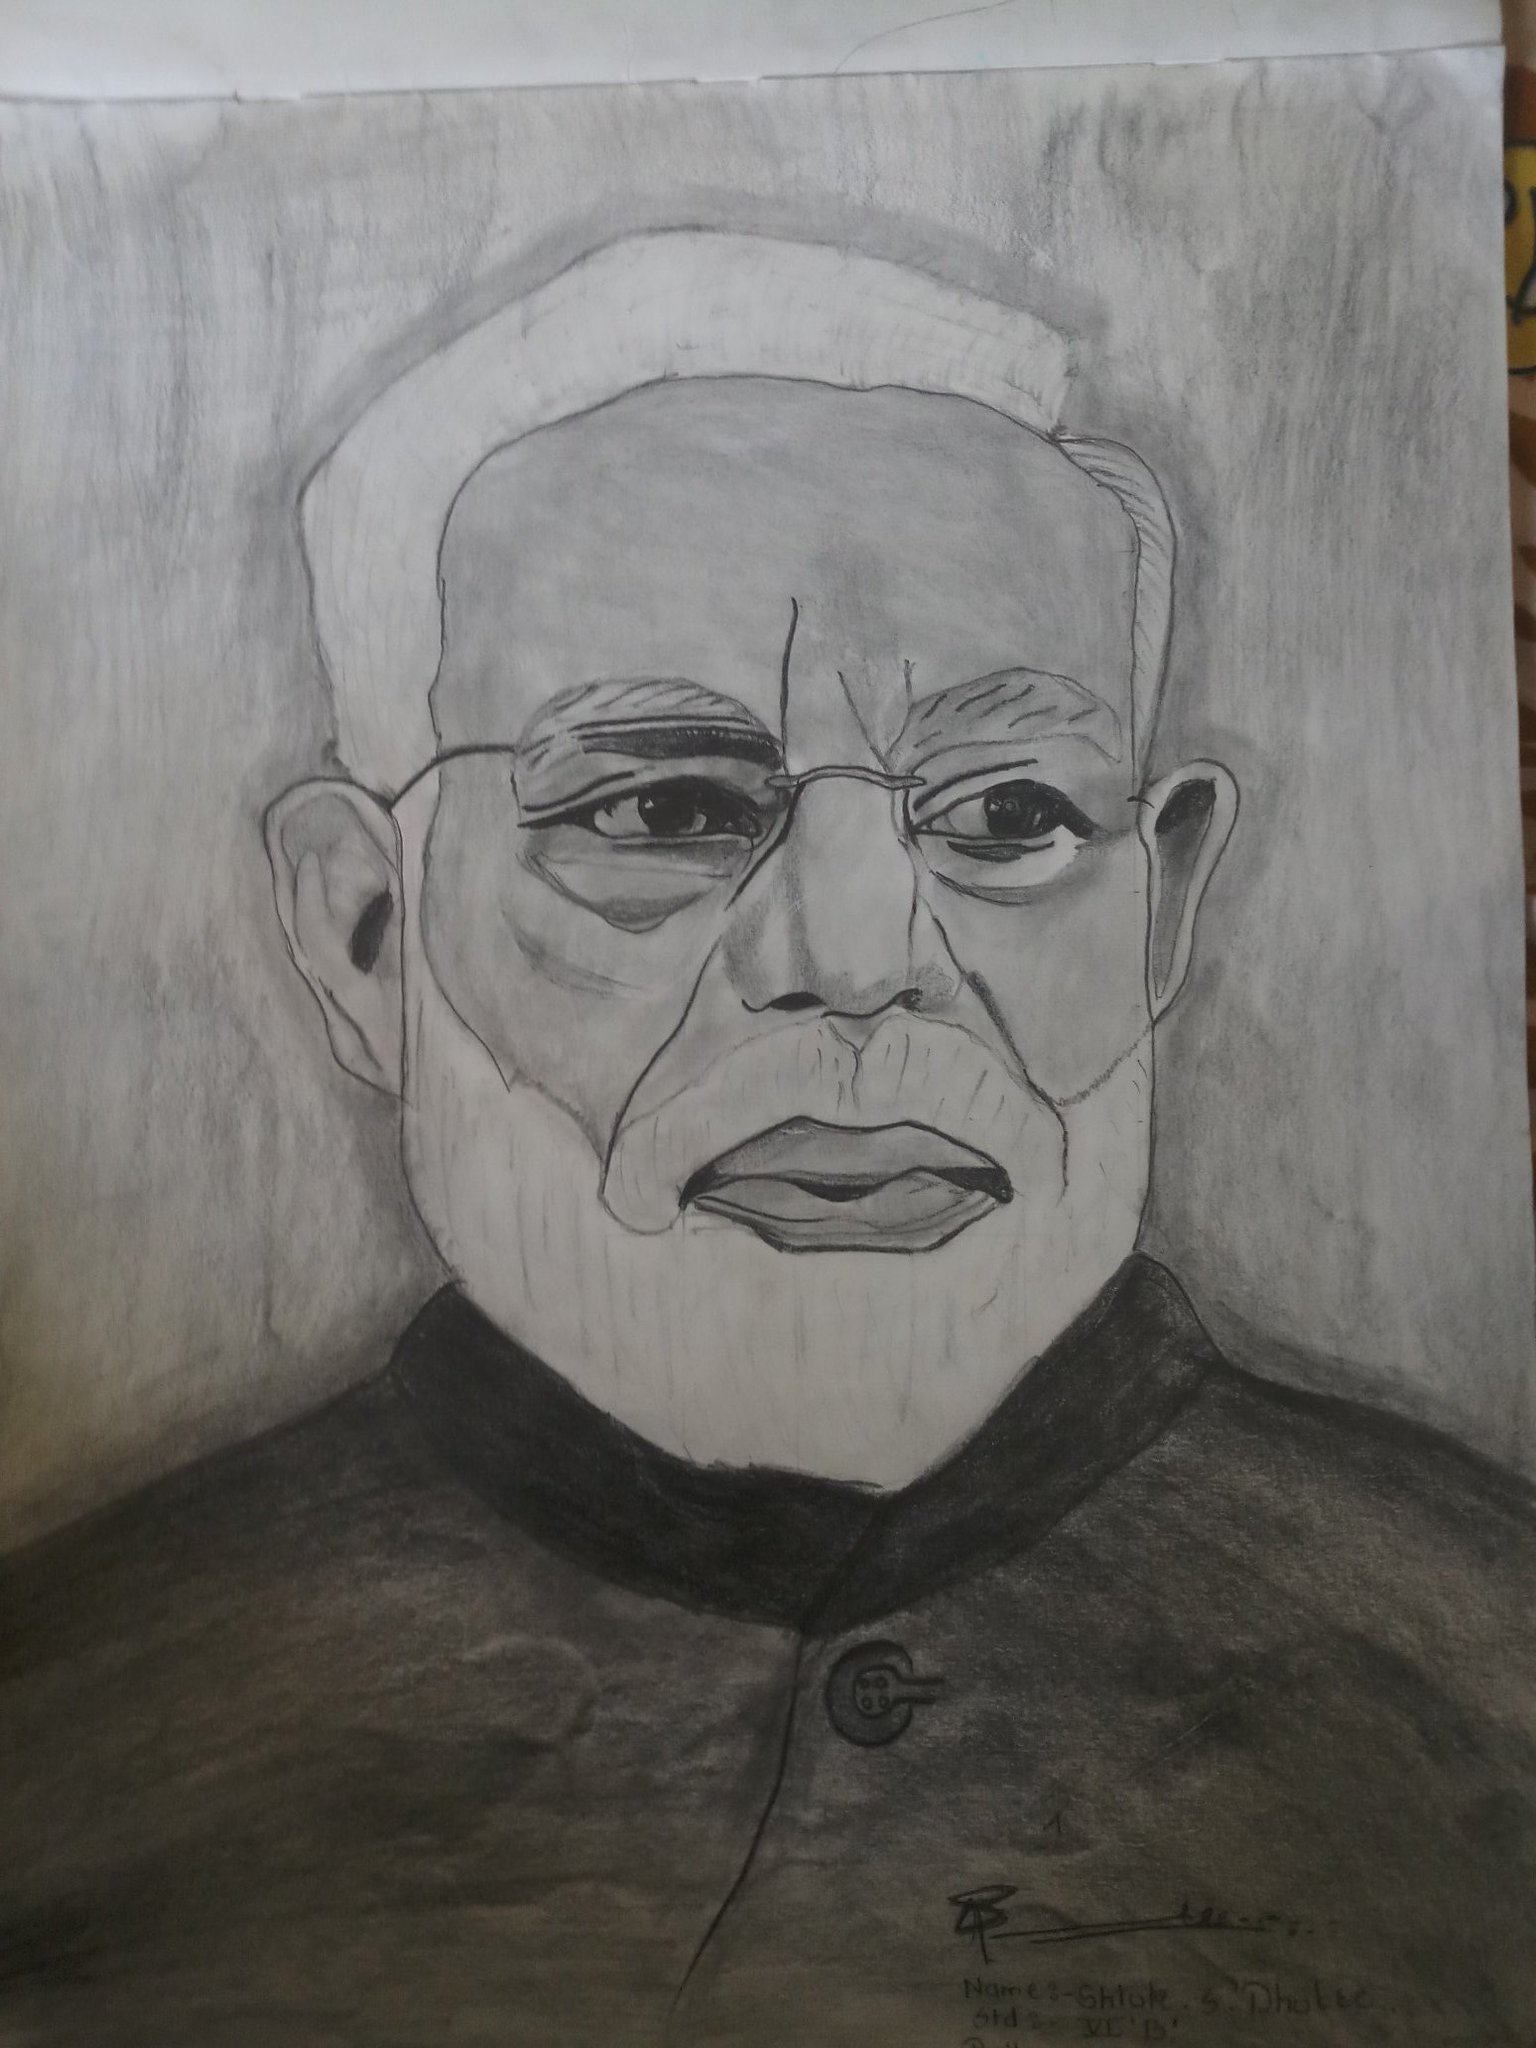 Happy Birthday Ris.Narendra Modi sir
Drawn by Shlok Sanjay Dhotre 7th std,BalShivaji School,Akola,Maharashtra. 